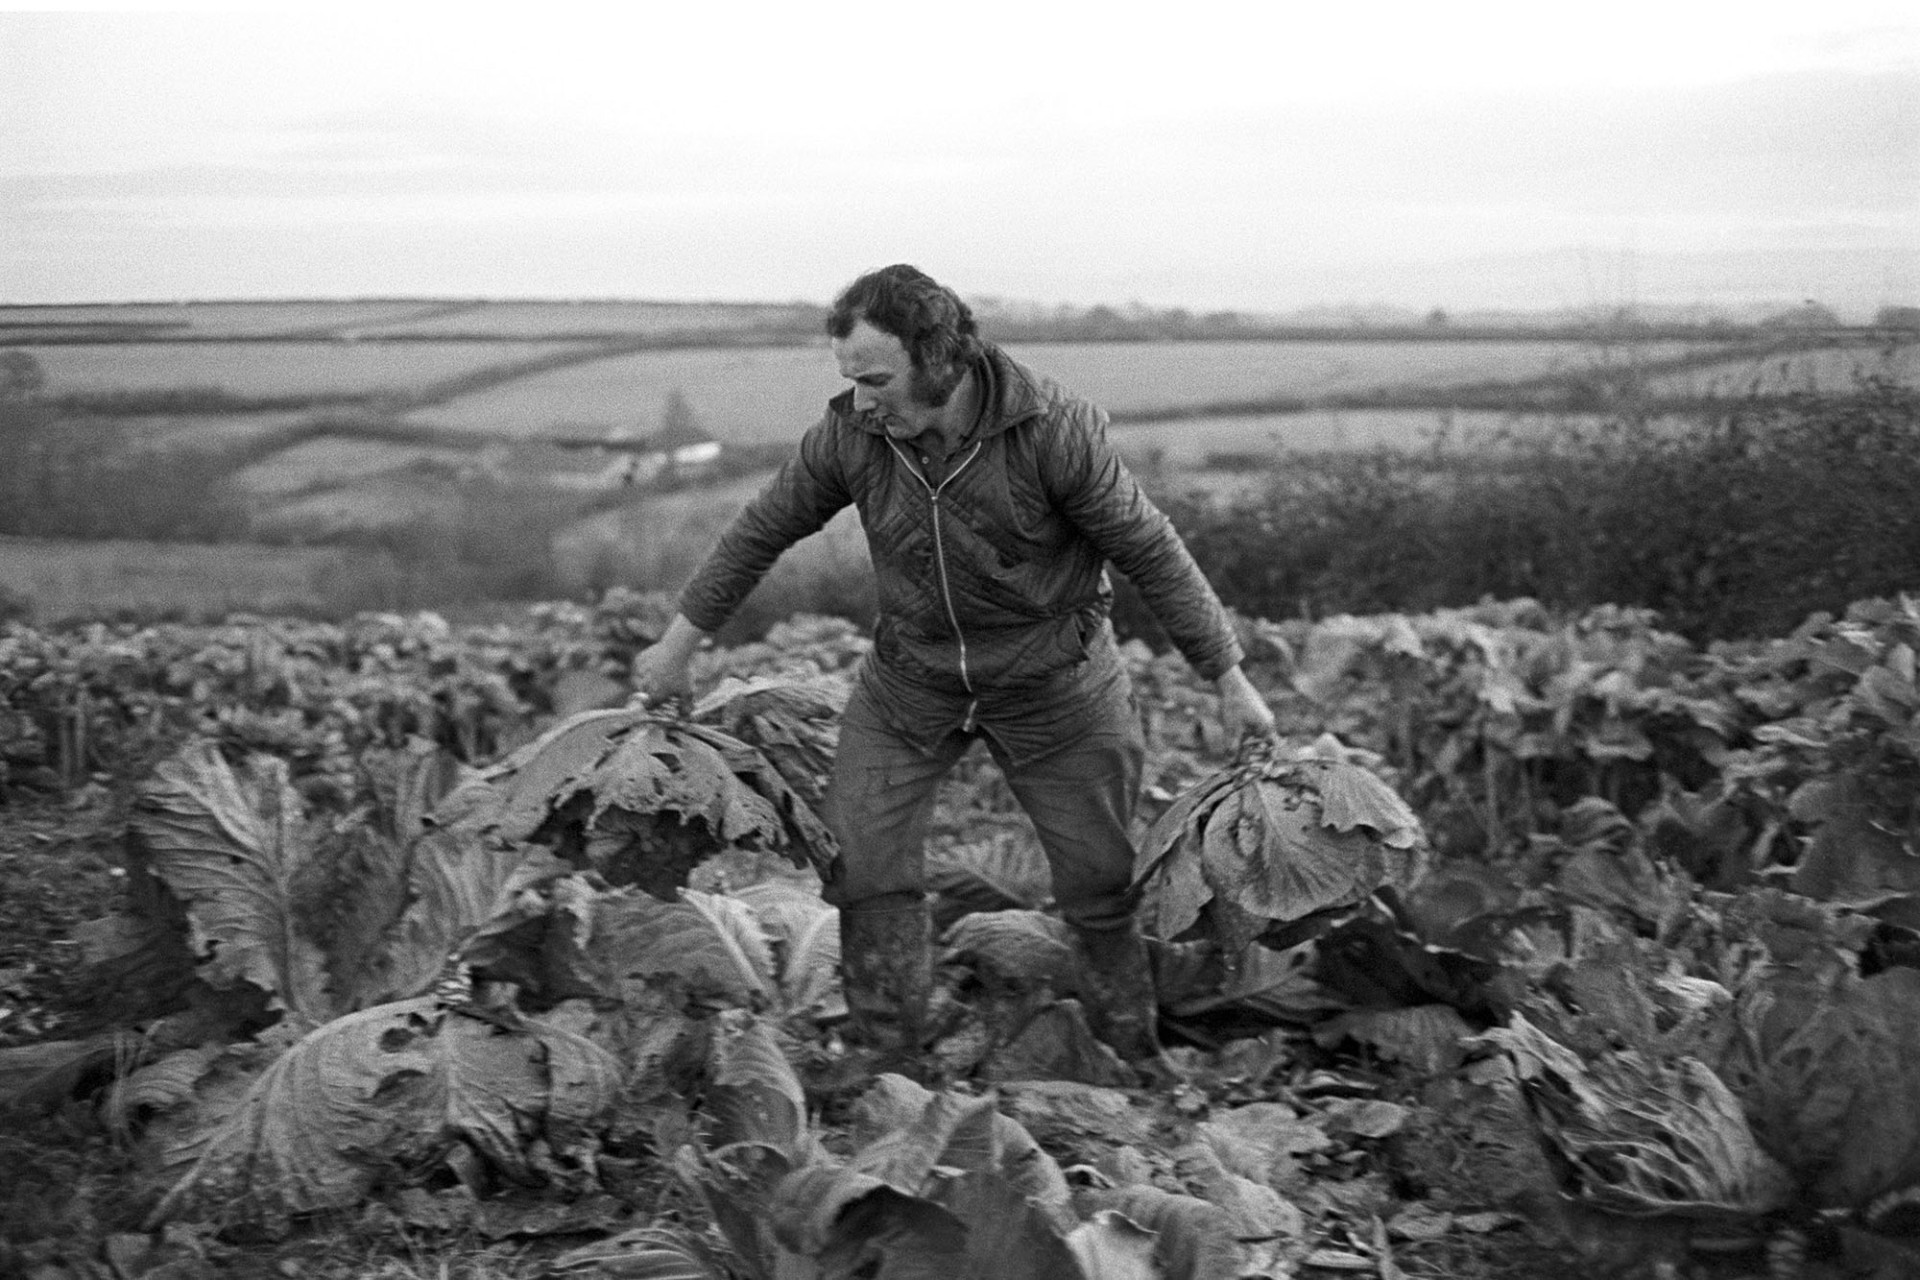 Man lifting flatpoles, (a kind of cabbage).
[Peter Jones lifting flatpole cabbages for livestock fodder, at Upcott, Dolton.]